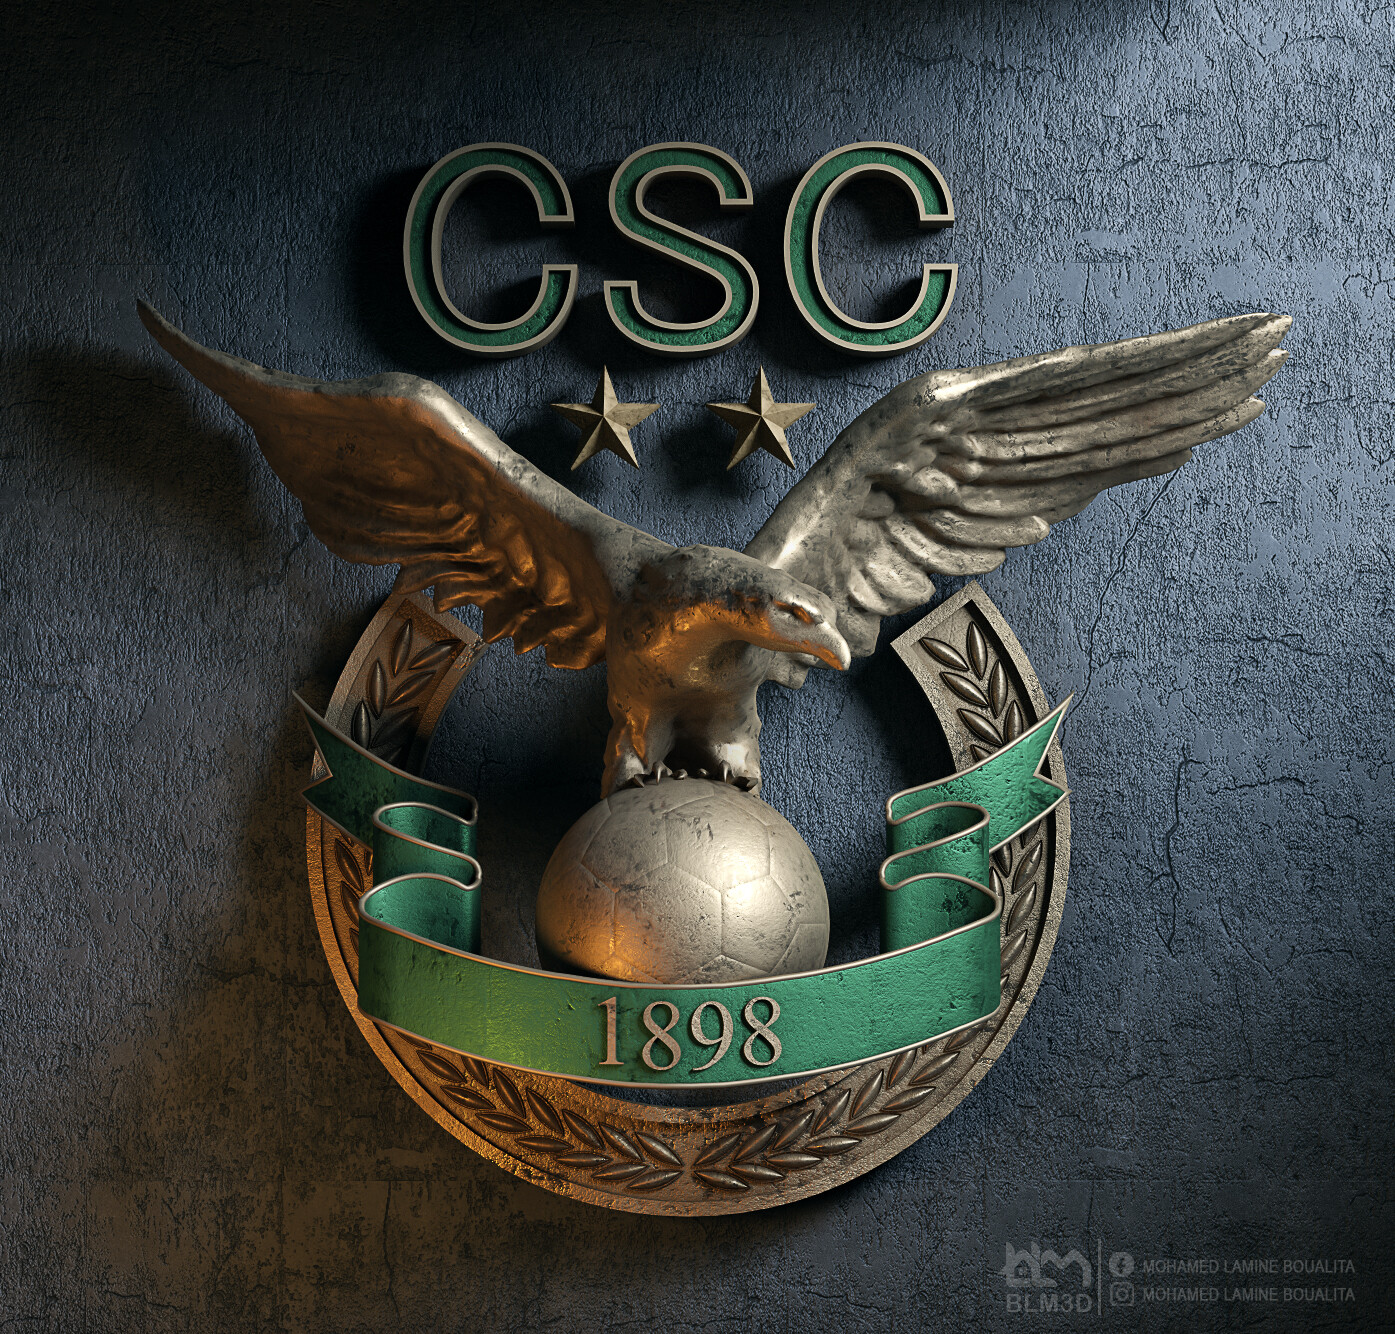 CSC Logo & Symbolism | IEEE Council on Superconductivity